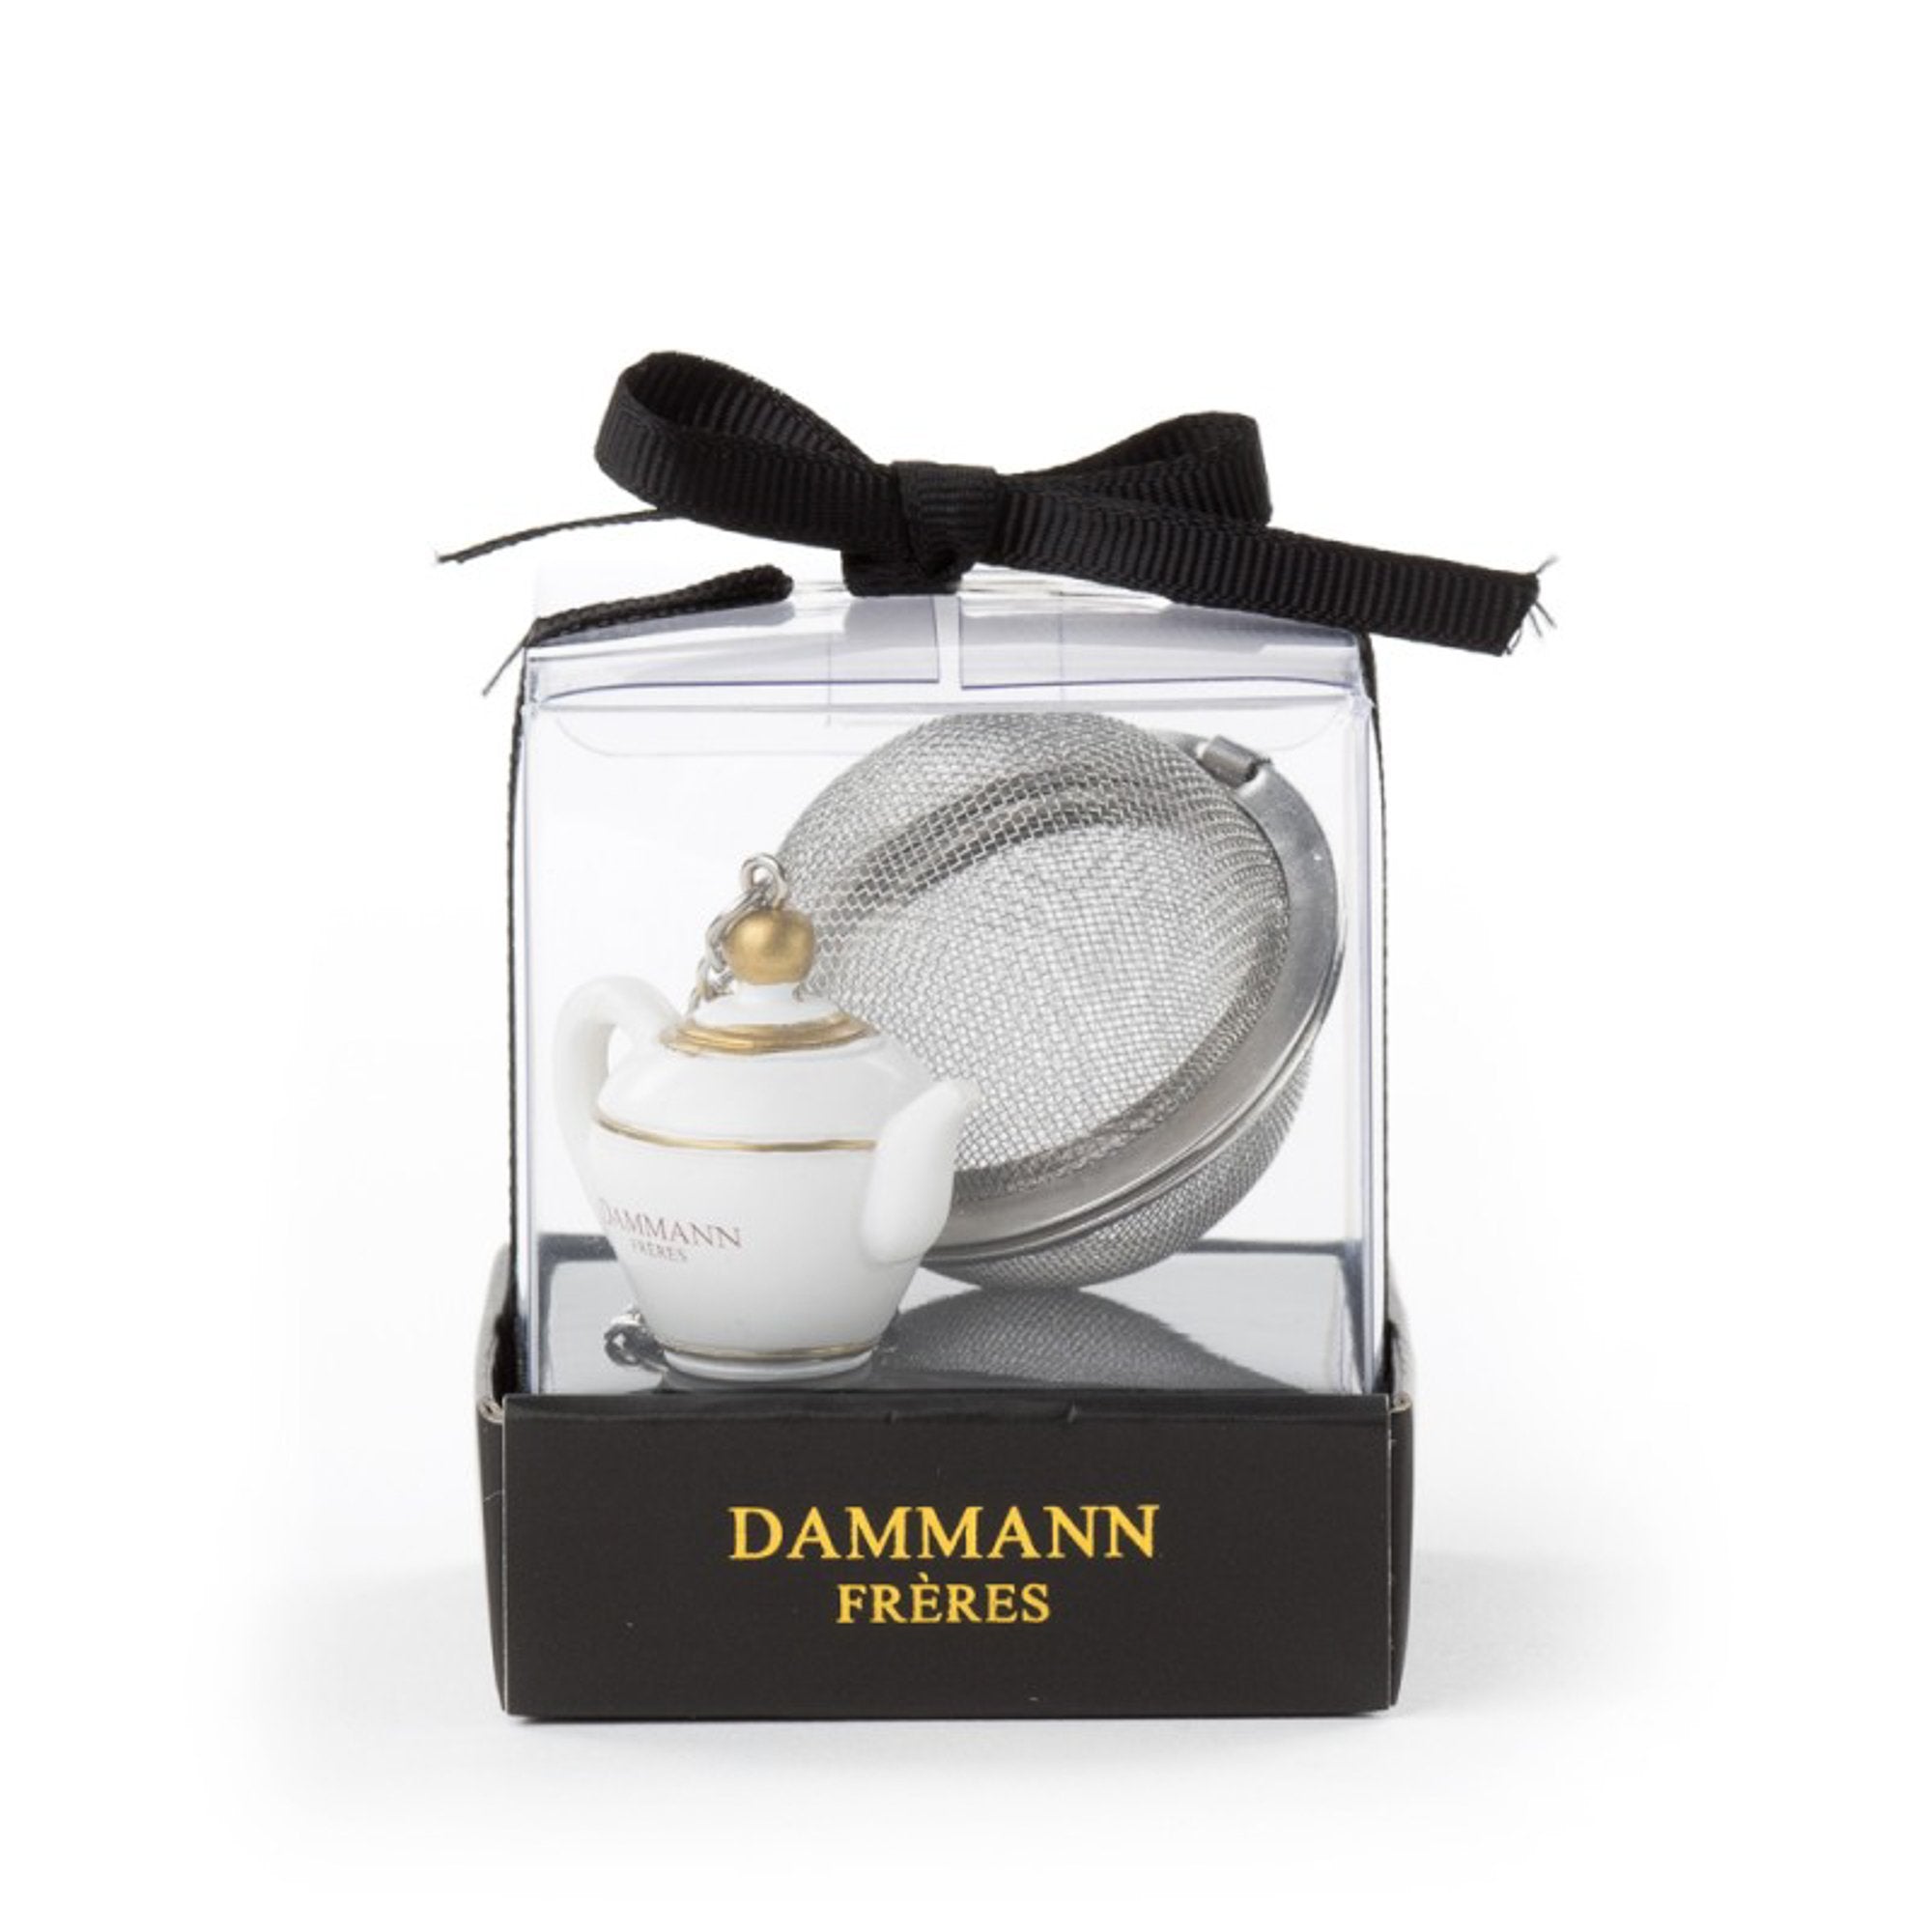 Tea strainer - Dammann Eiffel Tower – I love coffee